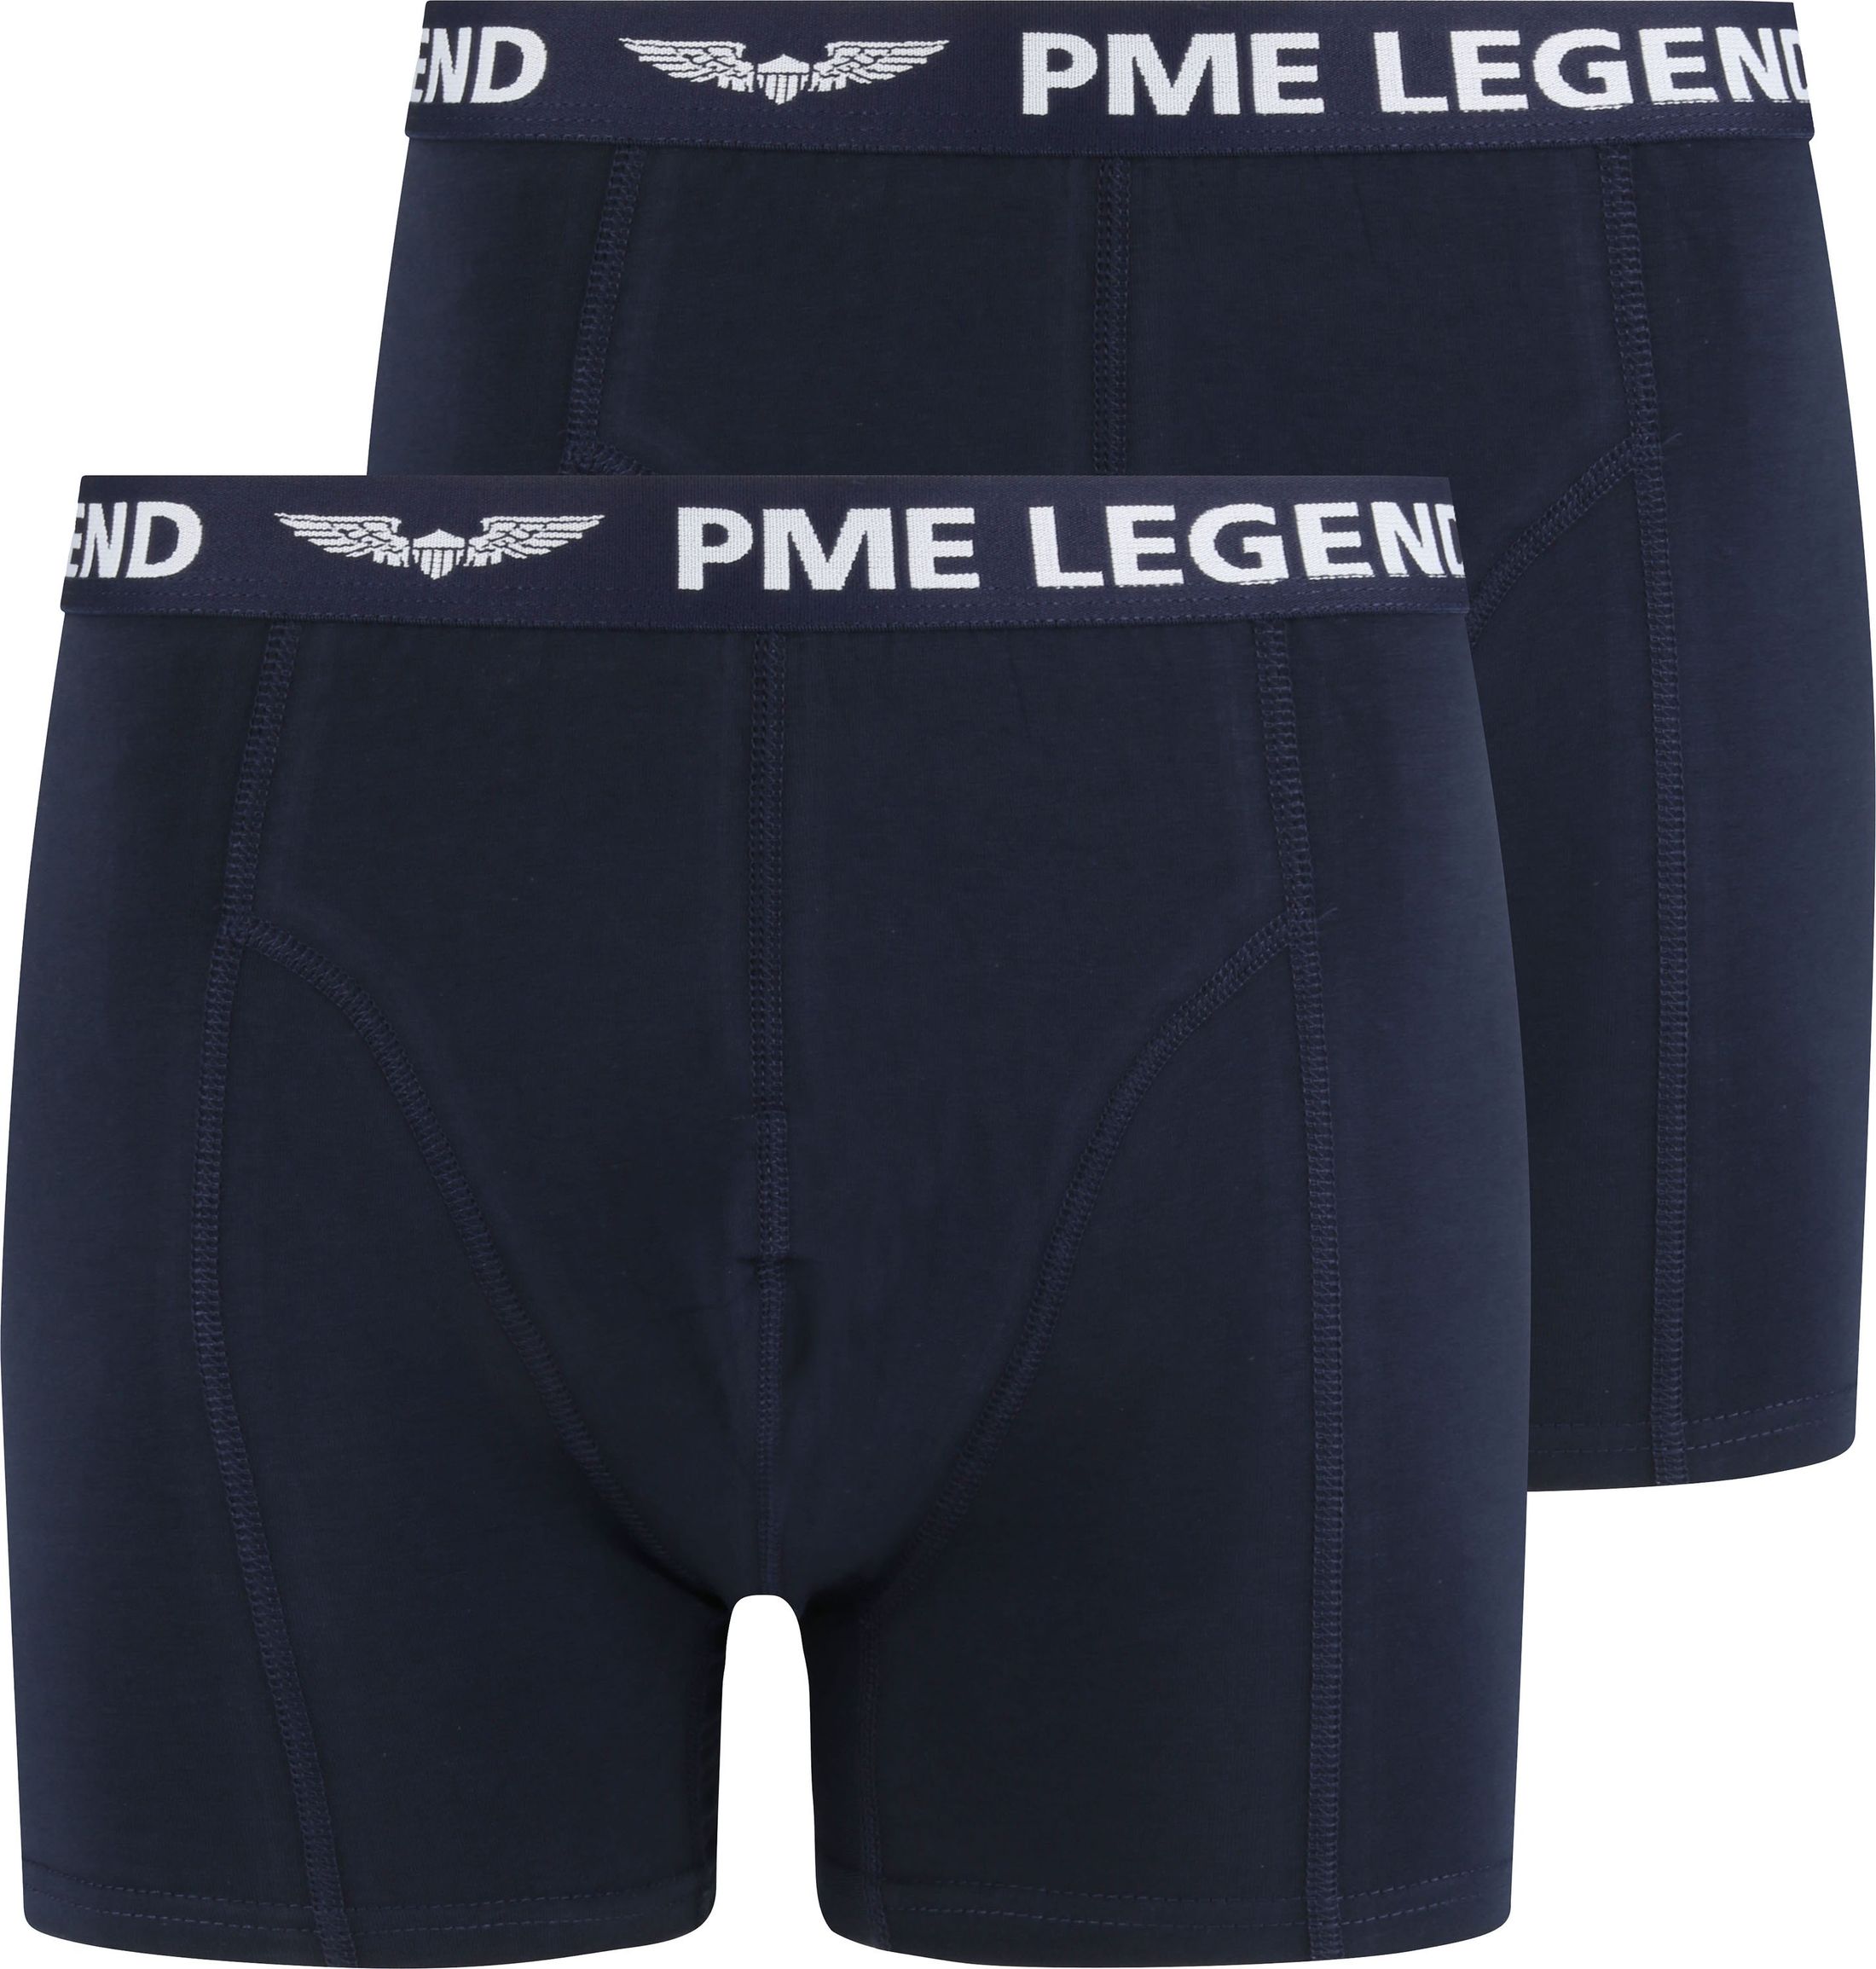 PME Legend Boxershorts 2-Pack Uni Navy Blue Dark Blue size 3XL